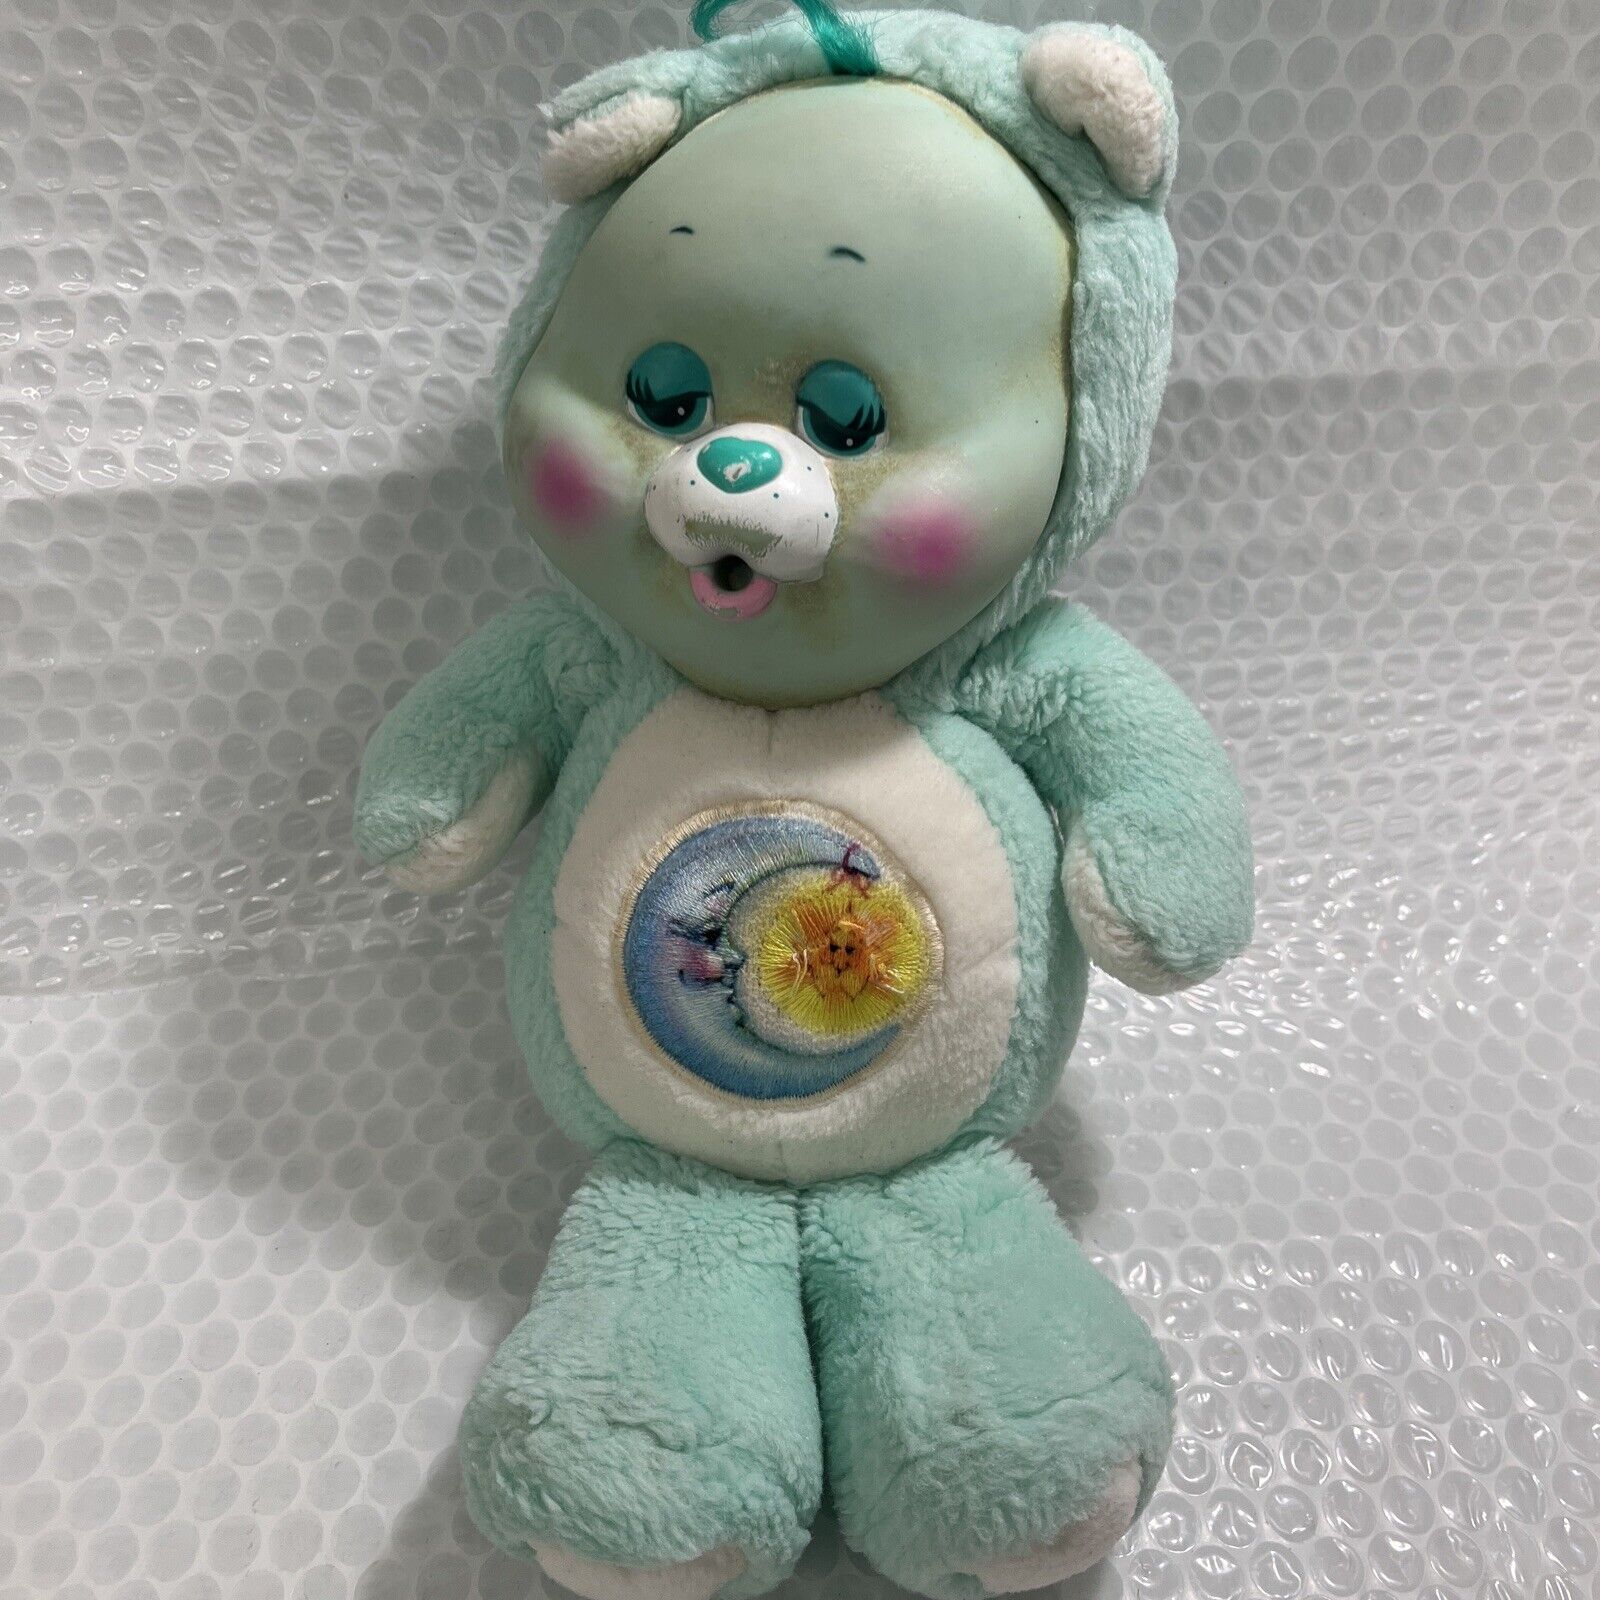 Adorable Vintage Care Bears Plush, Flocked Face Bedtime Bear Plush by Kenner